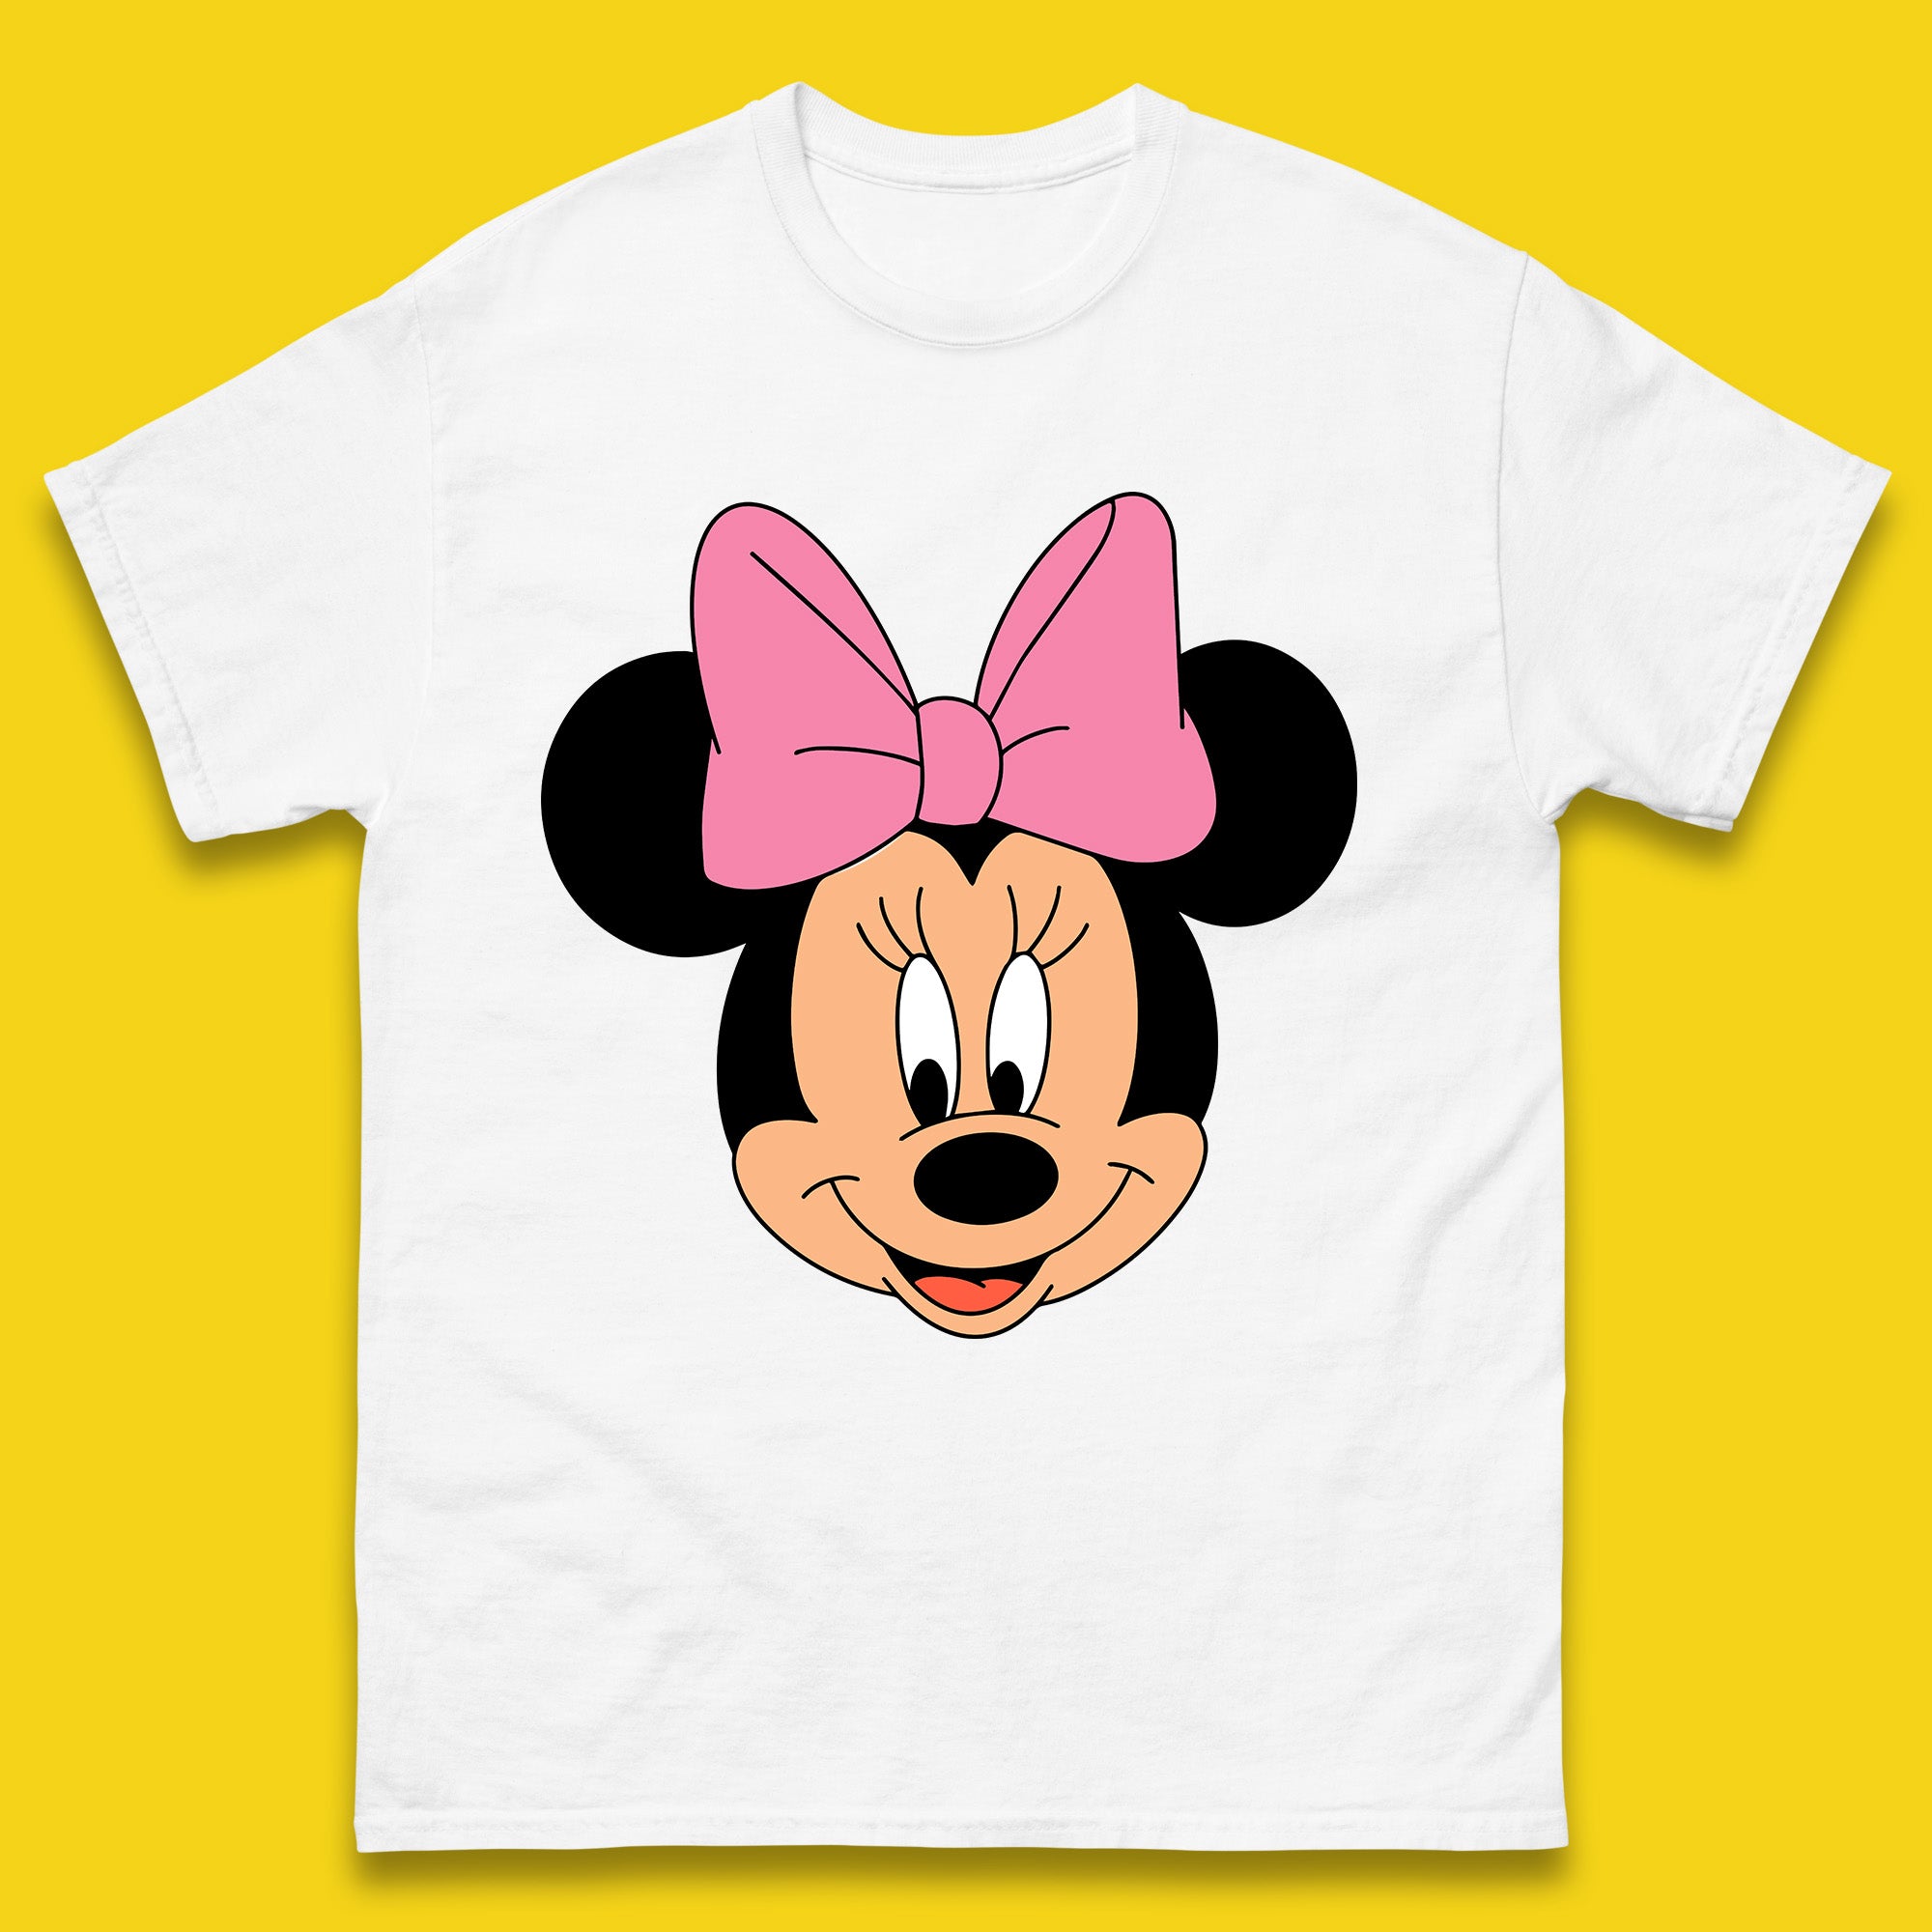 Disney Mickey Mouse Minnie Mouse Face Cartoon Character Disneyland Vacation Trip Disney World Mens Tee Top